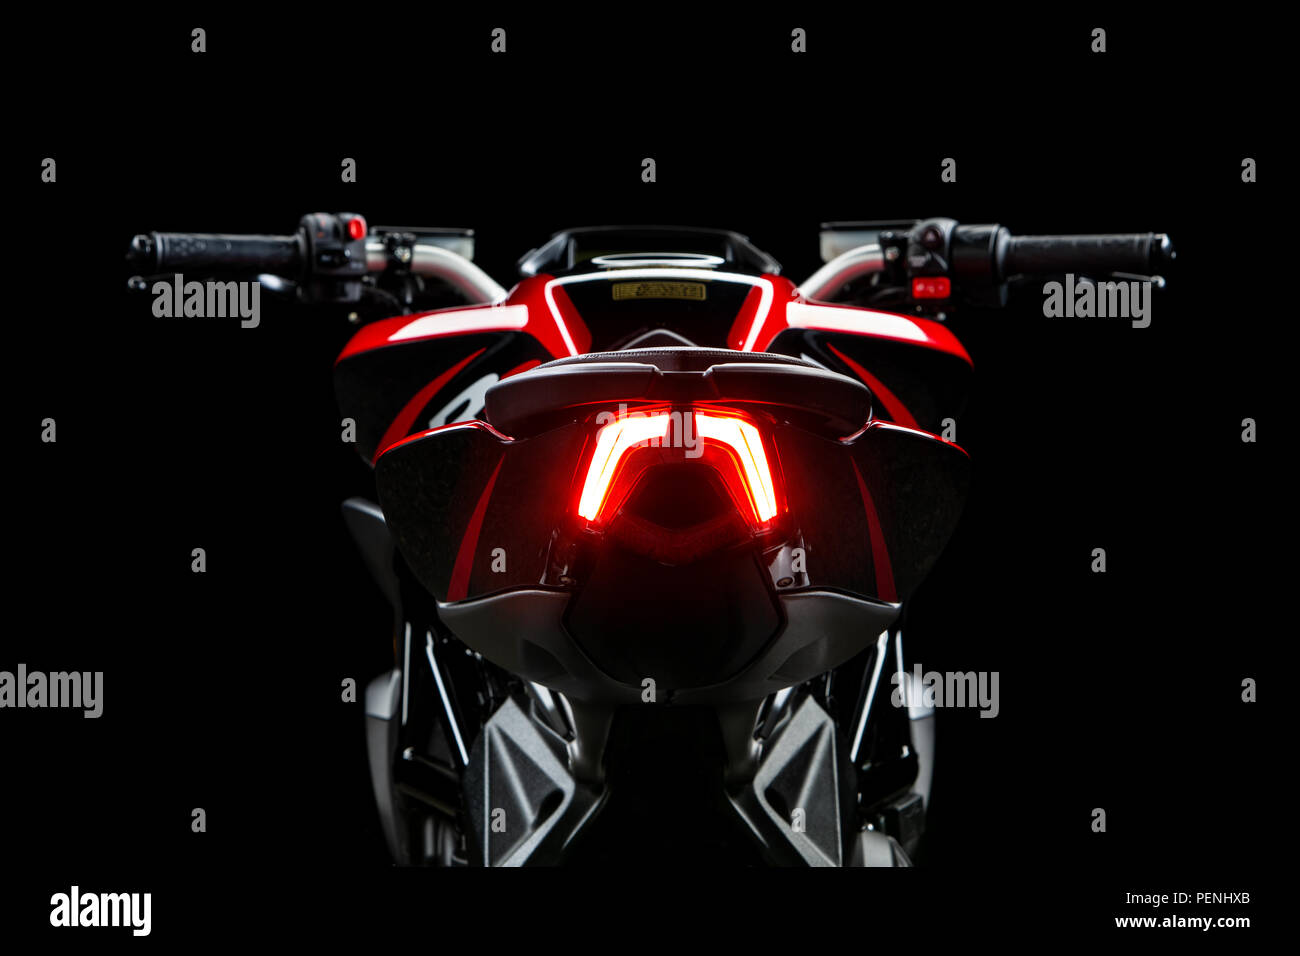 Studio image of a 2018 MV Agusta Brutale motorbike on a black background. Stock Photo